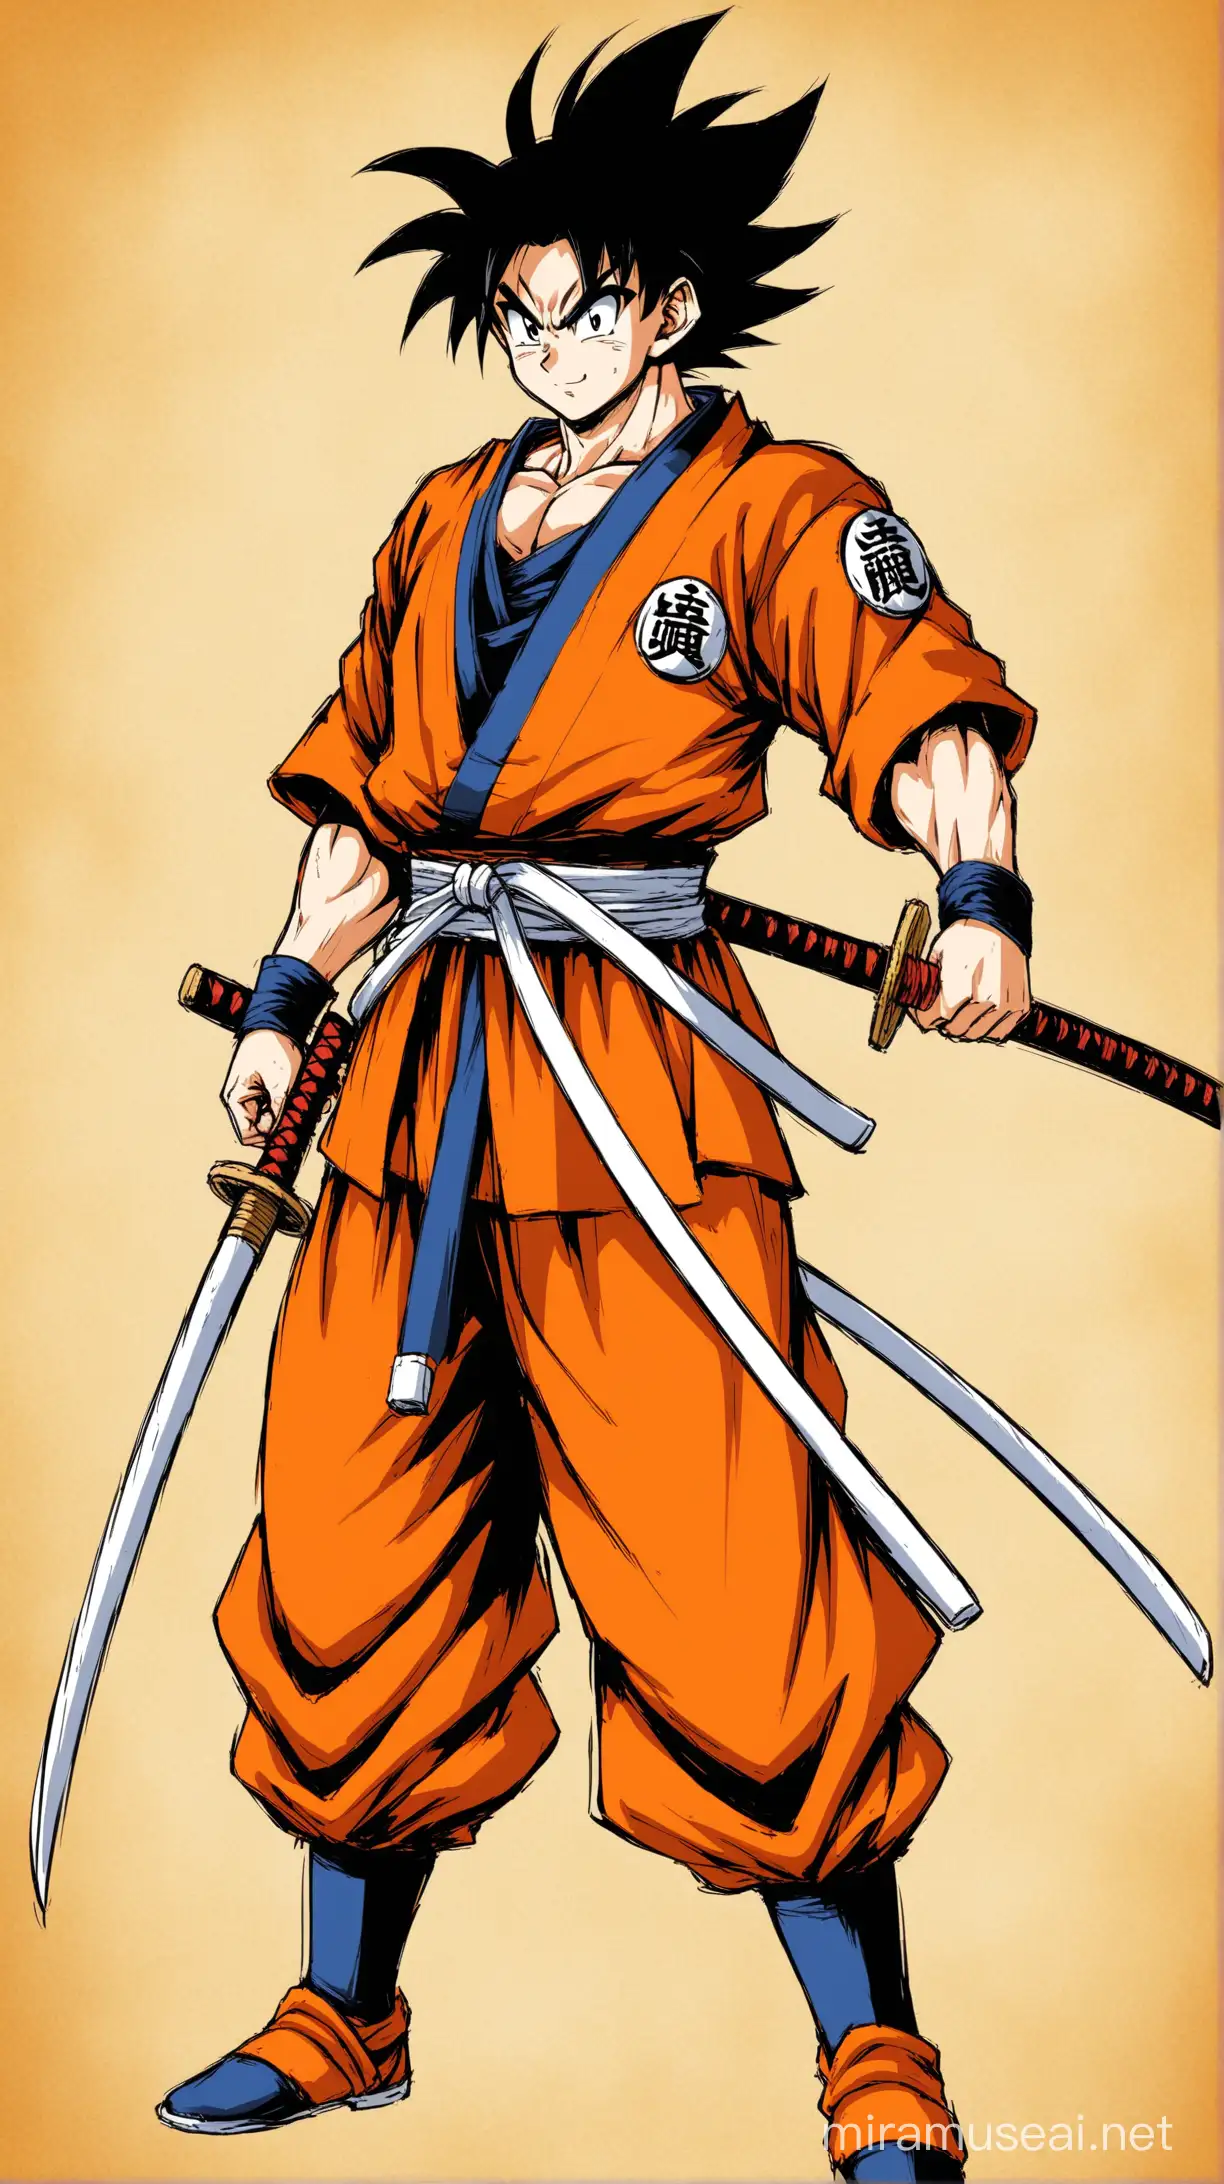 Goku Samurai Warrior Master of Martial Arts and Swordsmanship